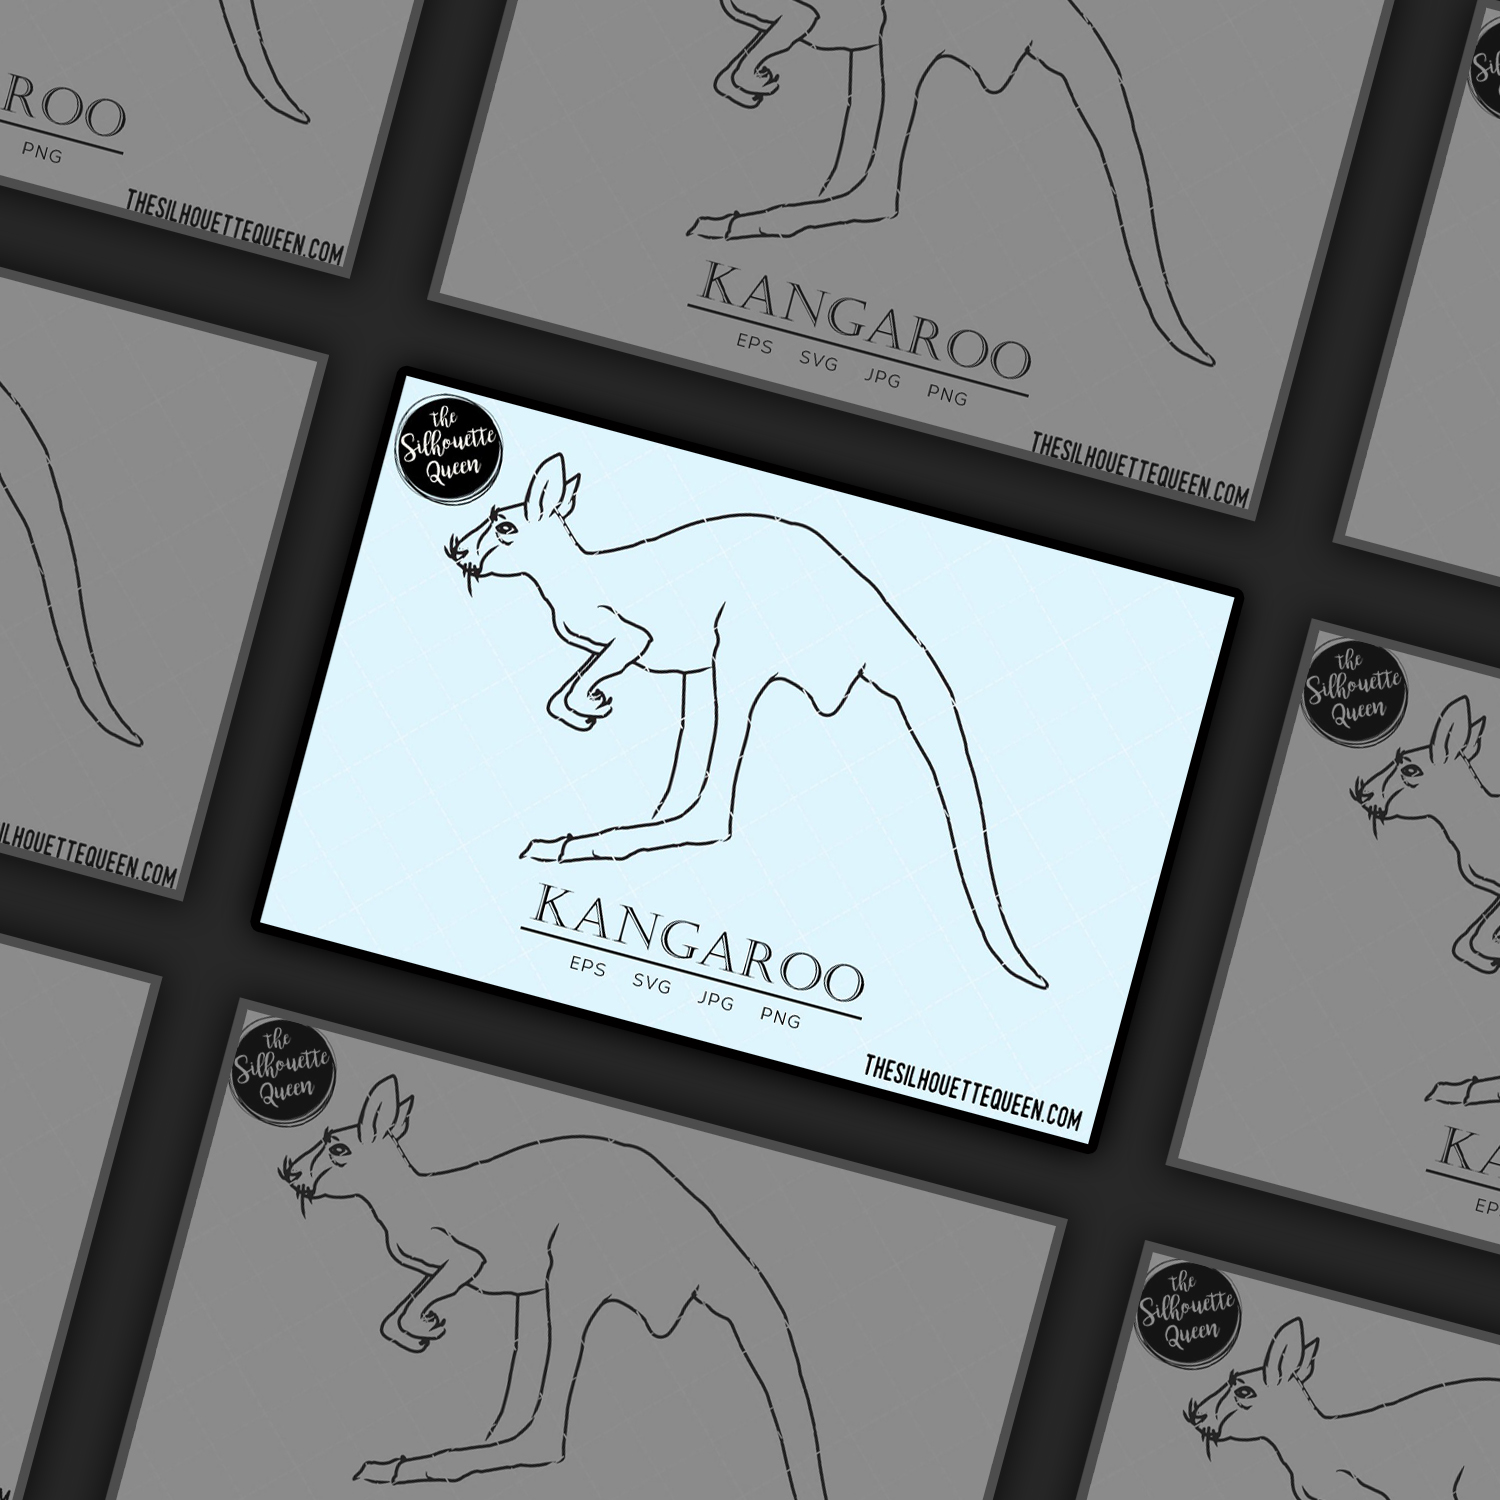 Kangaroo Sketch cover.